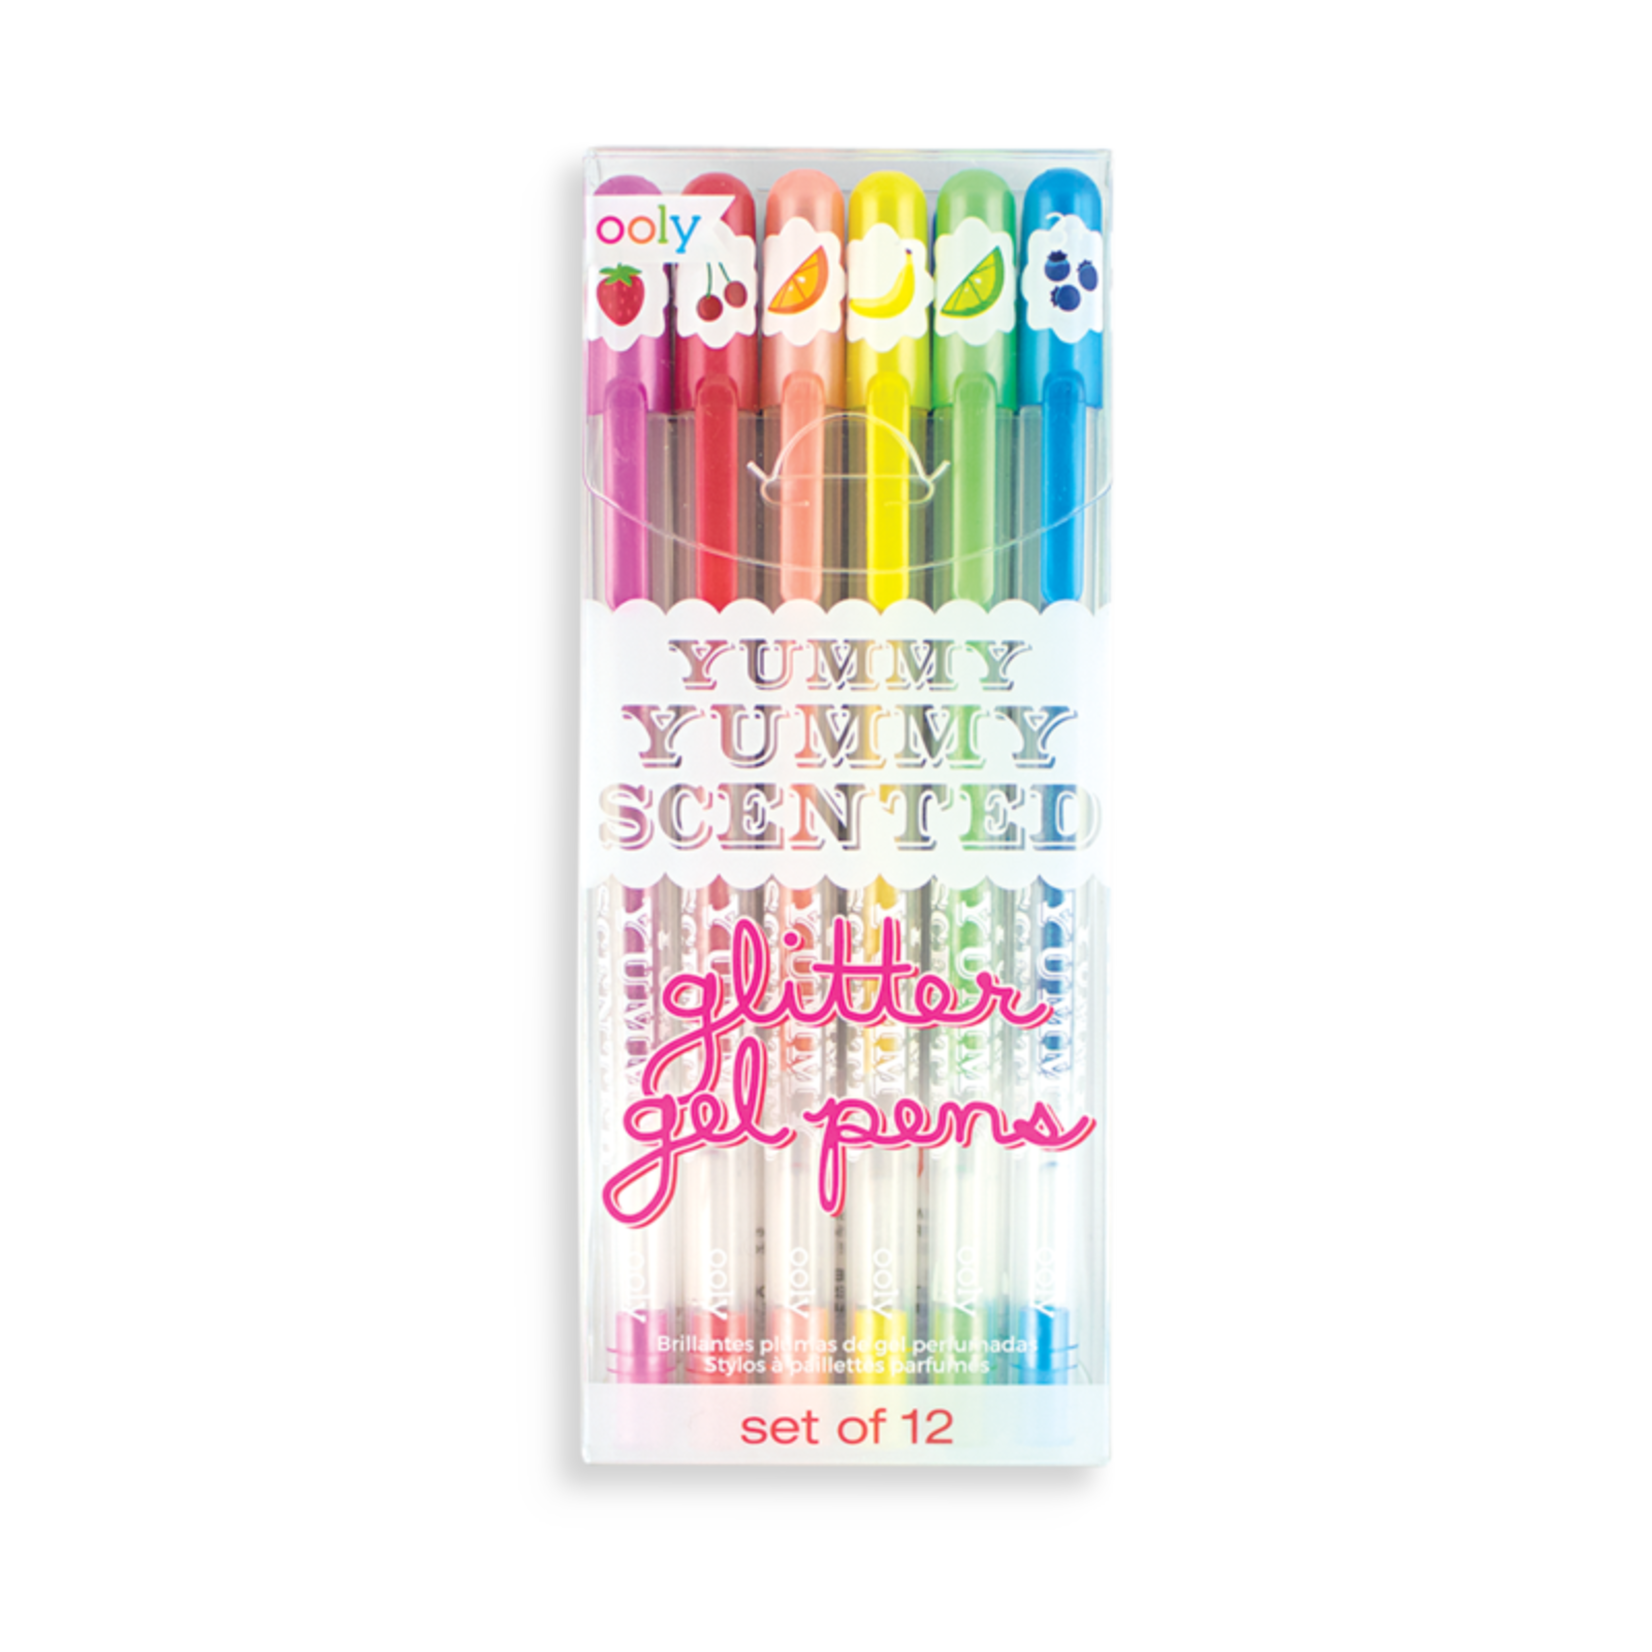 OOLY Scented Glitter Gel Pens